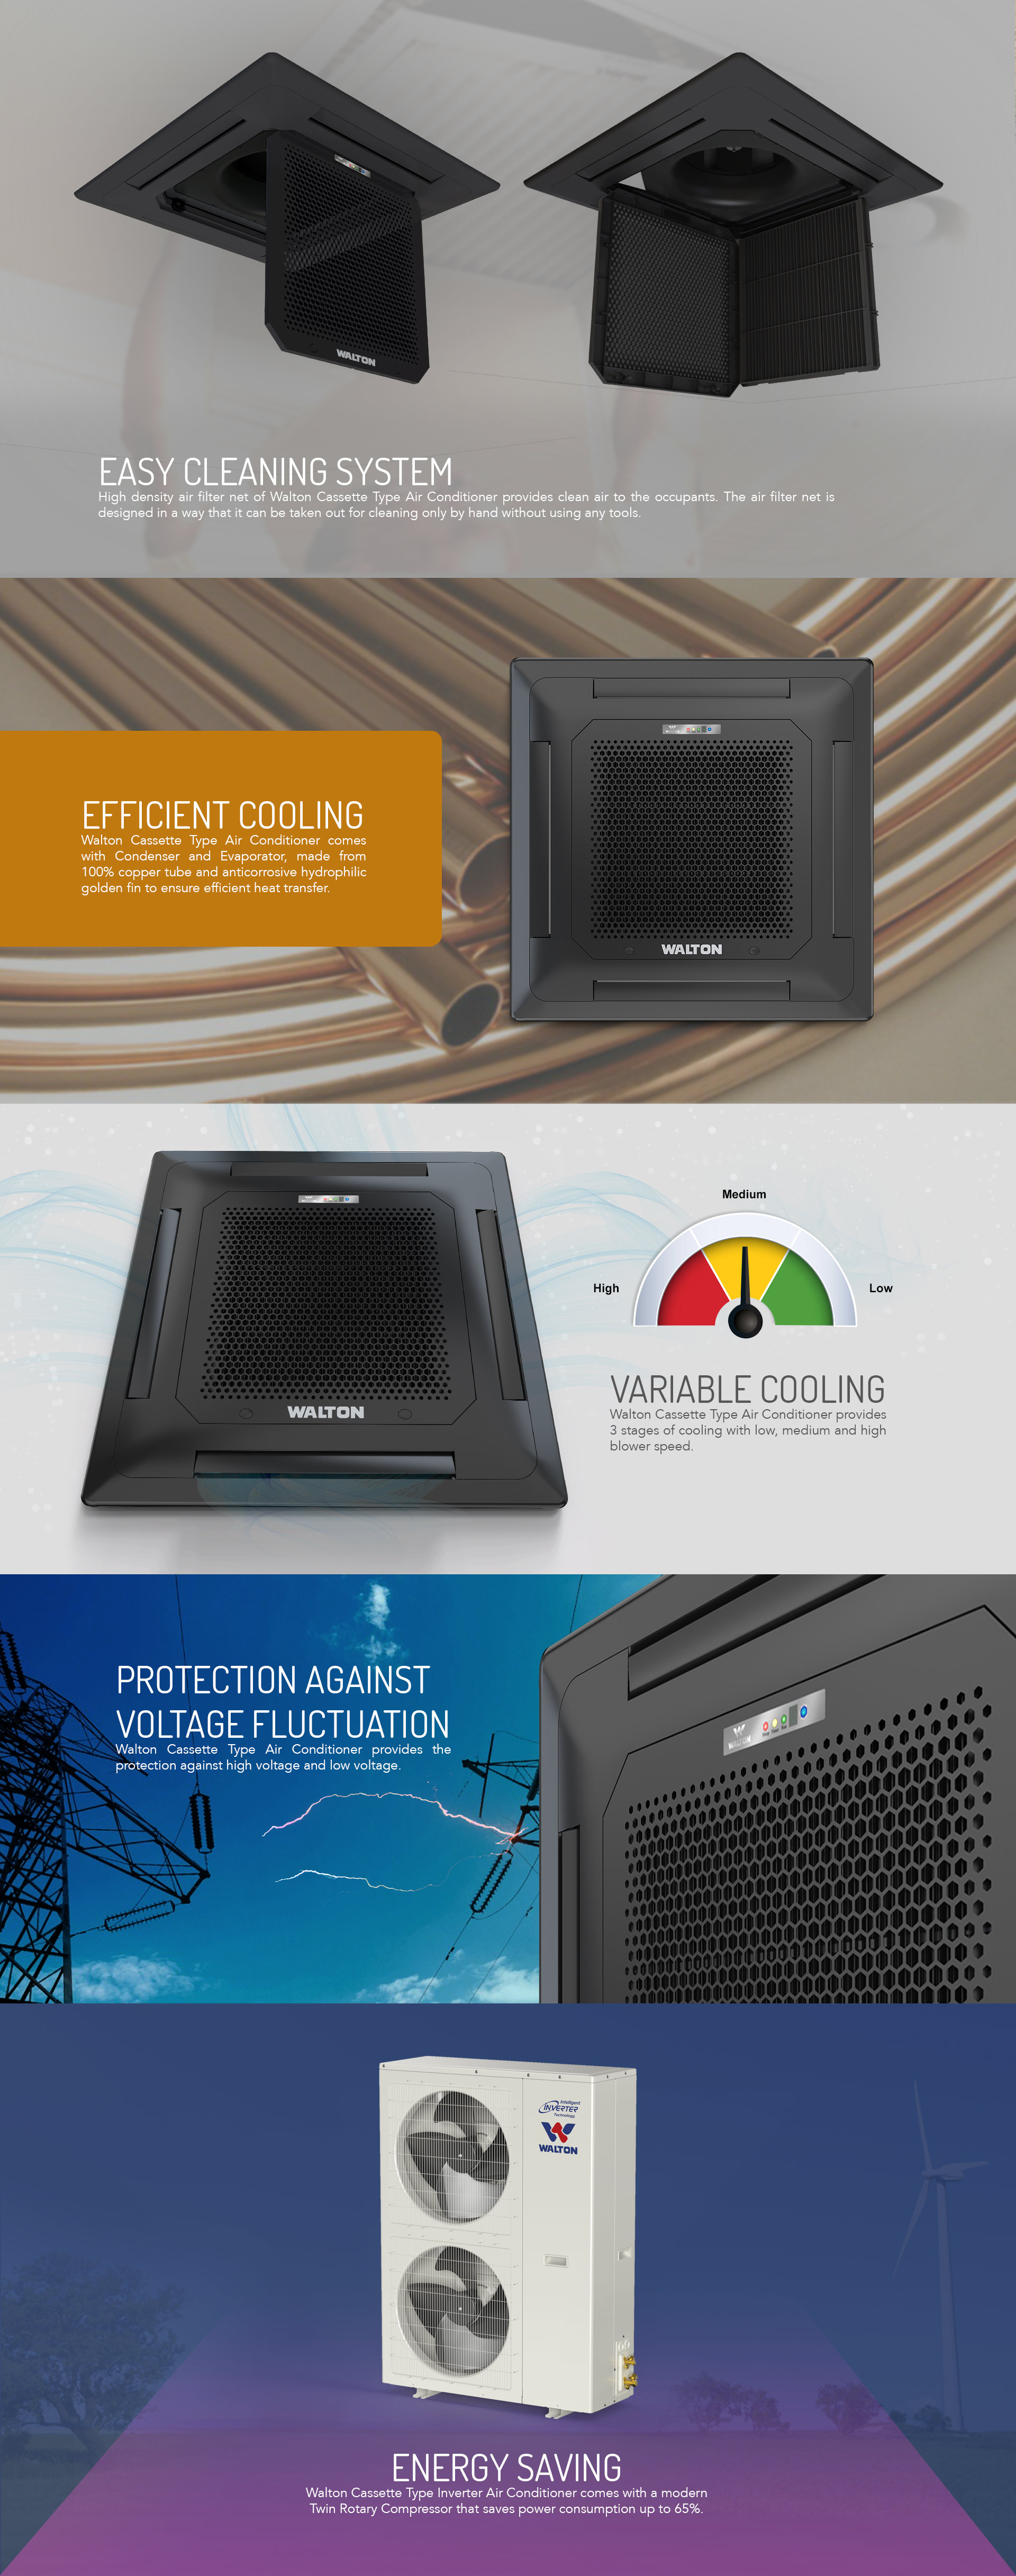 walton-commercial-black-color-4-ton-air-conditioner-wci-hexacomb-48z-feature-image